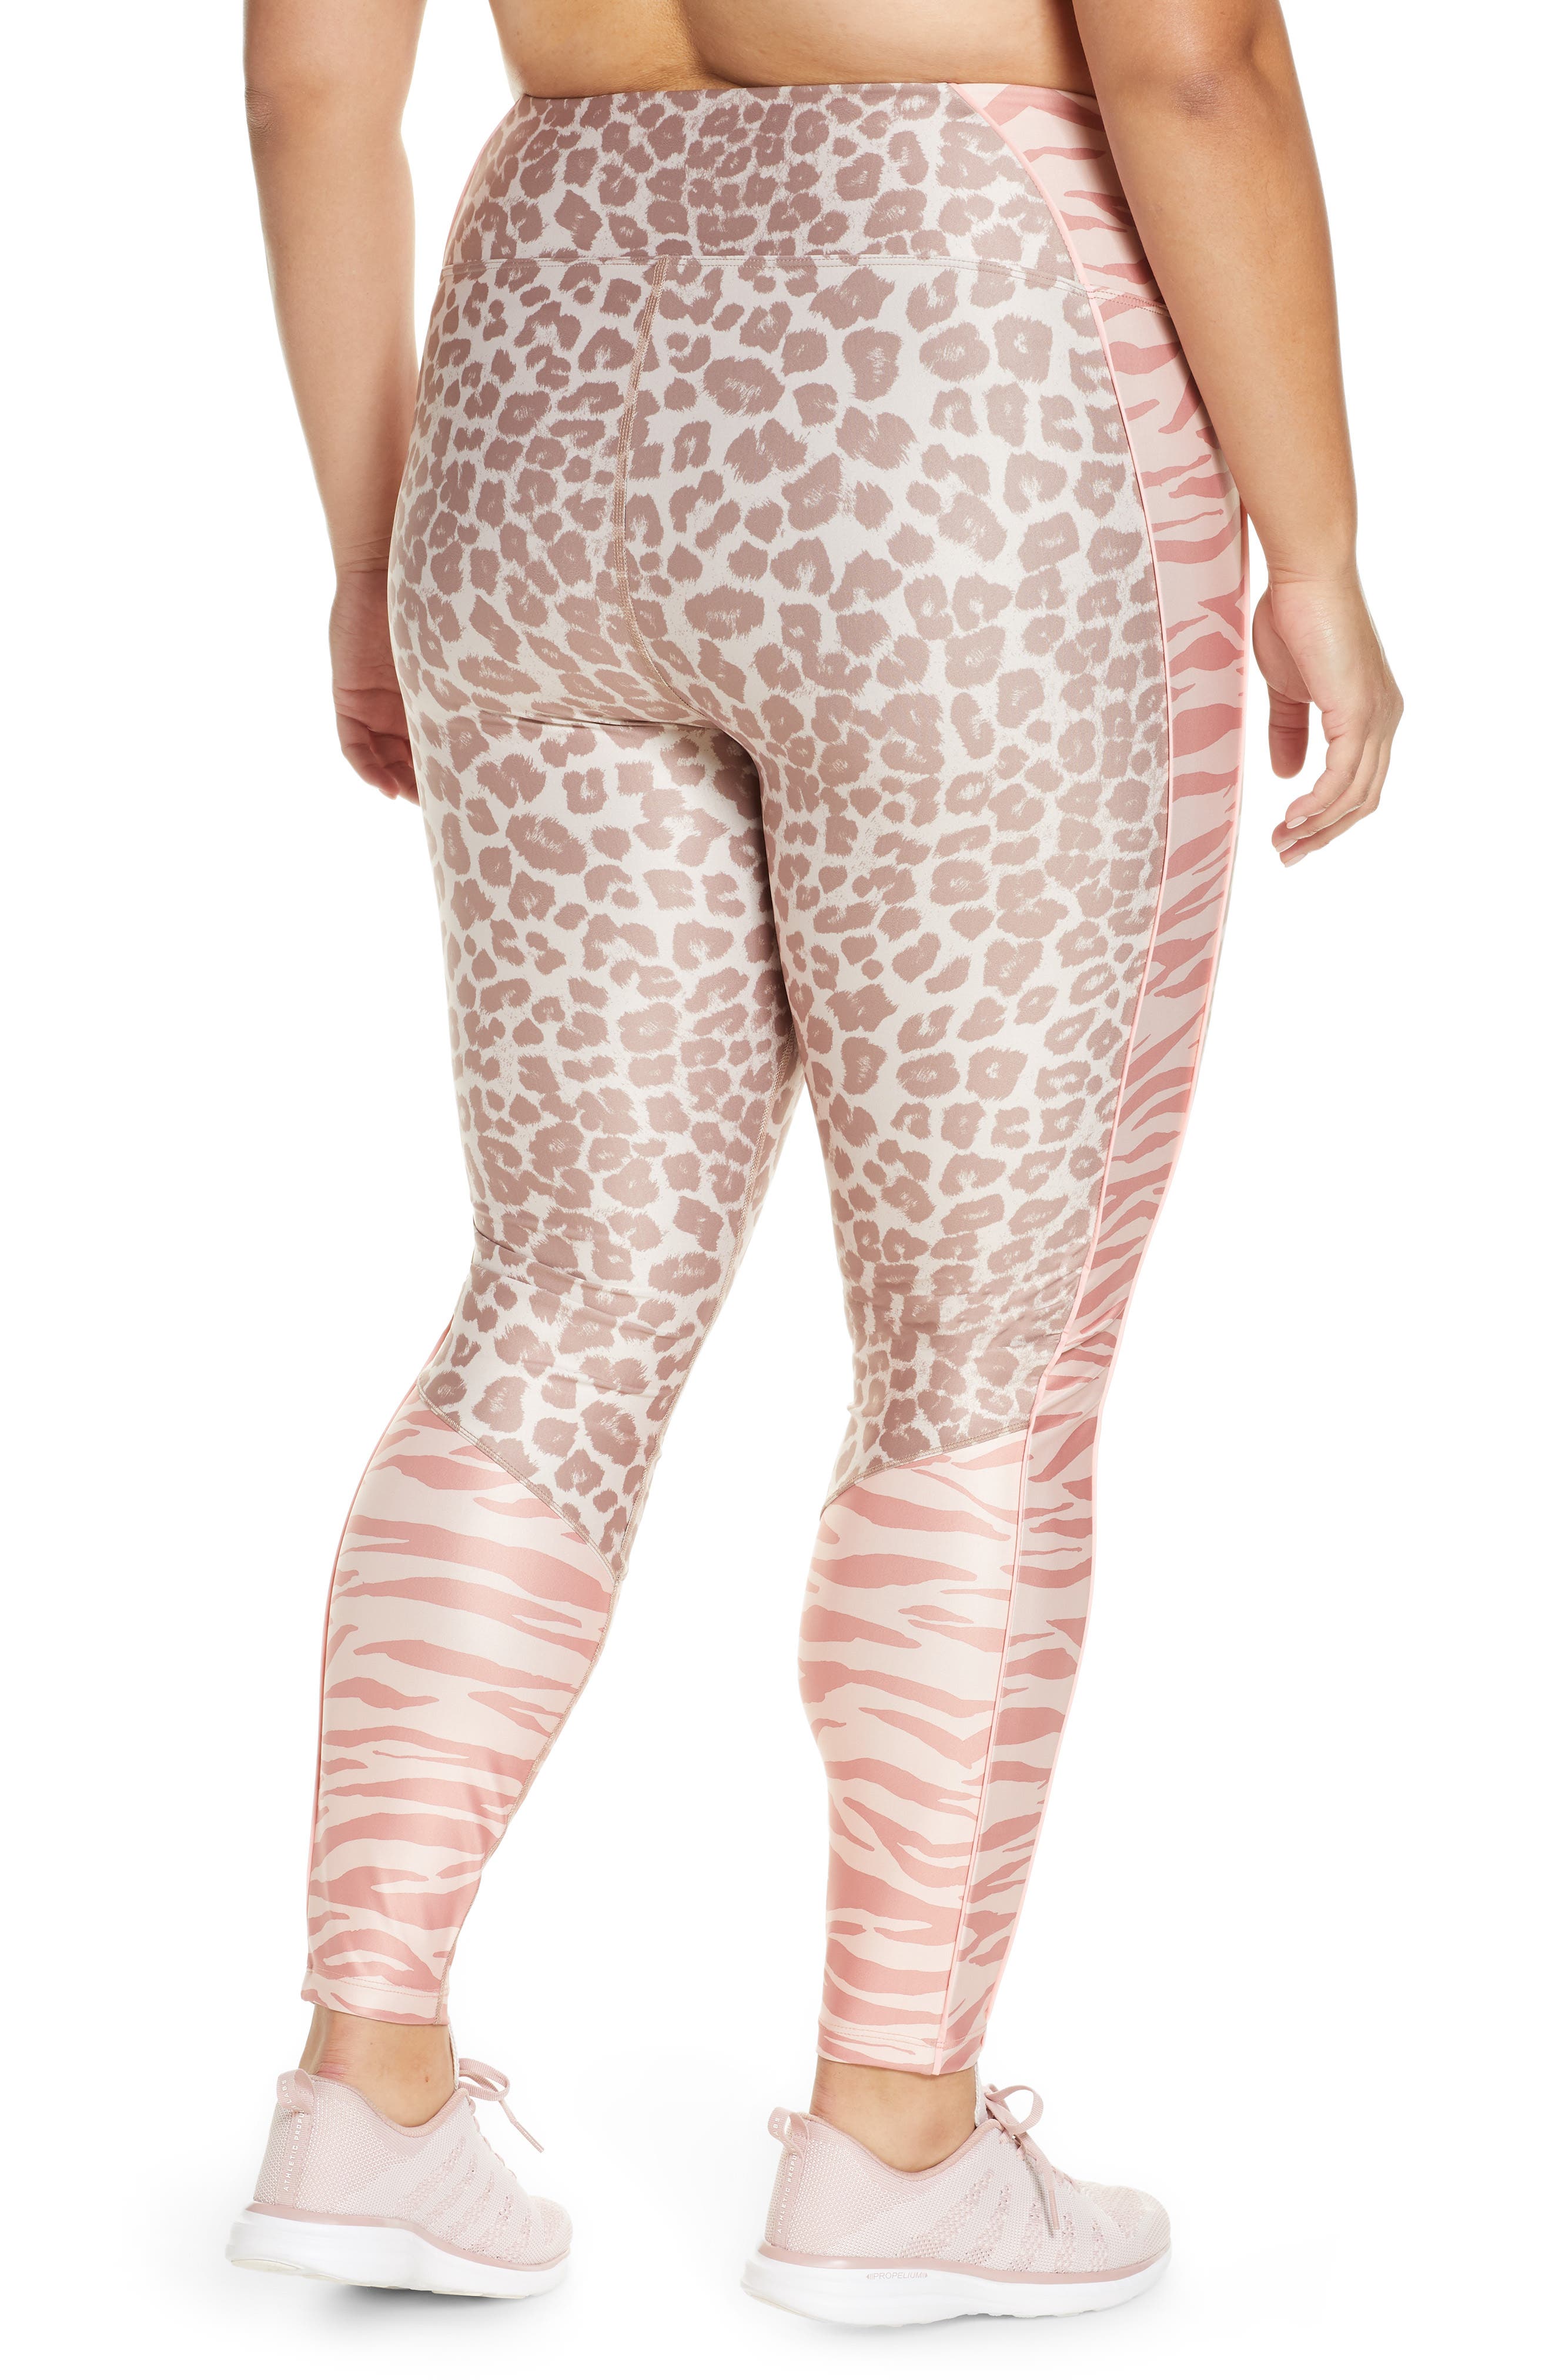 Hue Leopard Print Legging, $44, Zappos